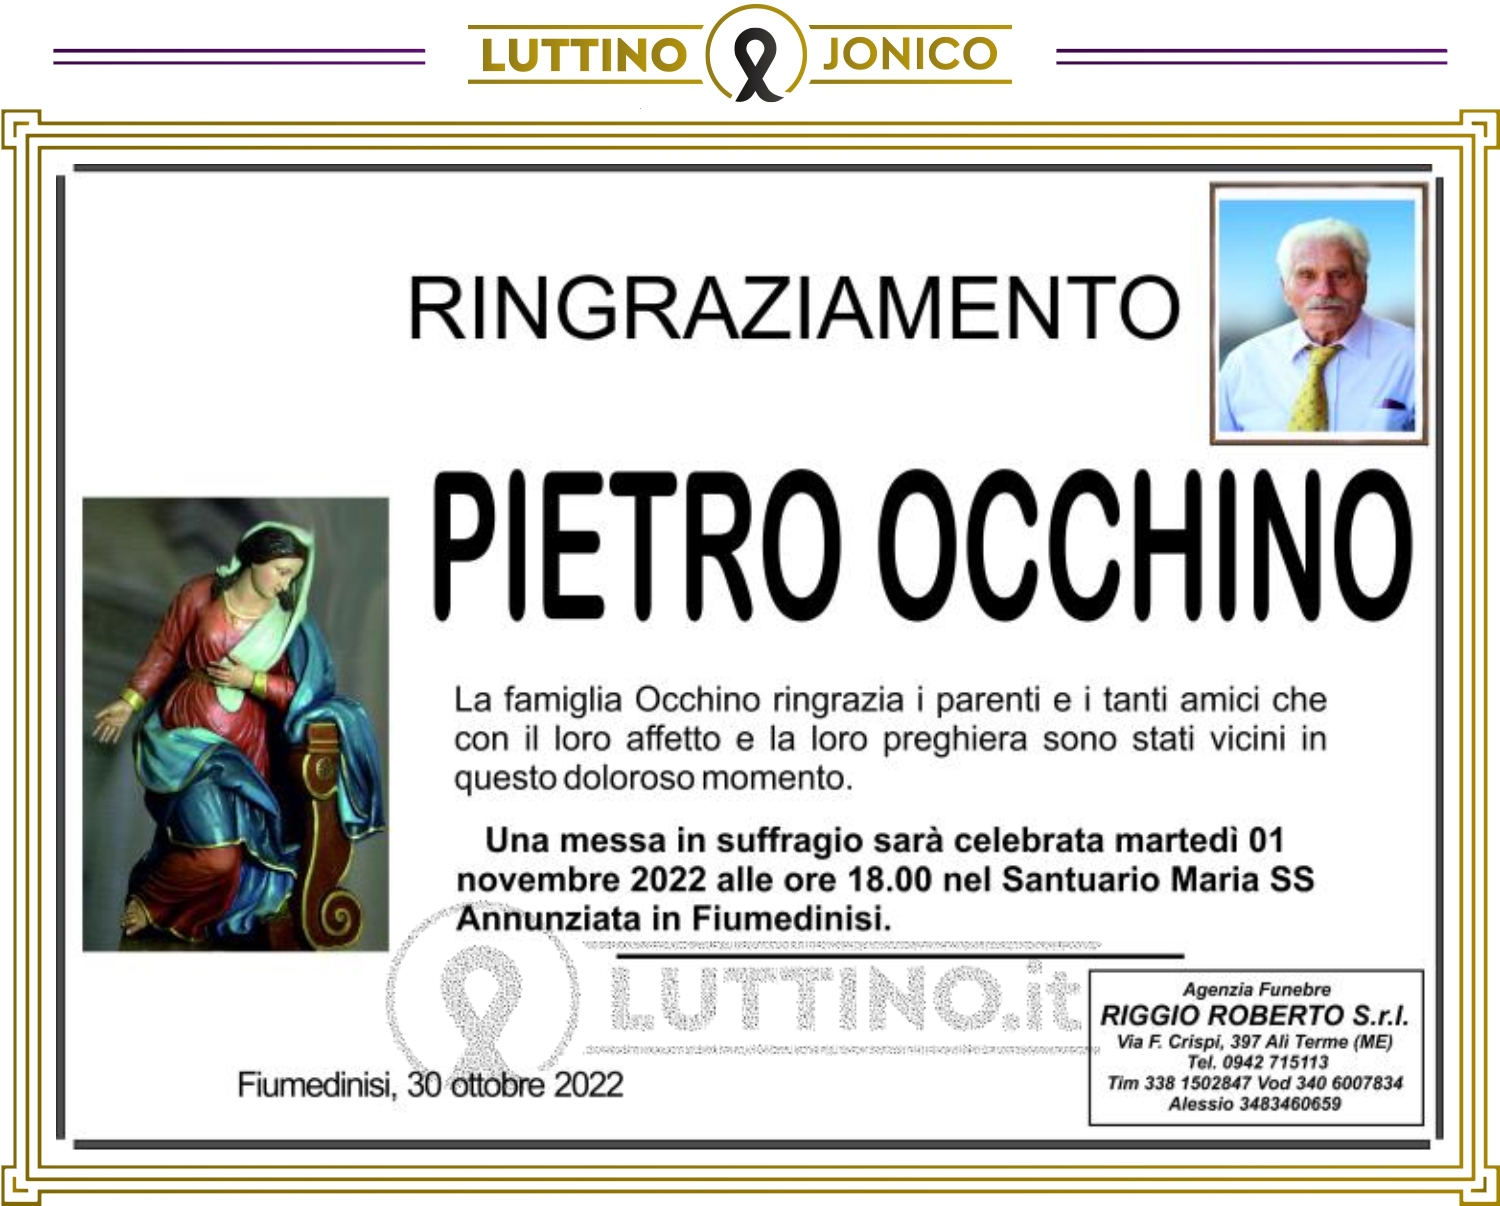 Pietro Occhino